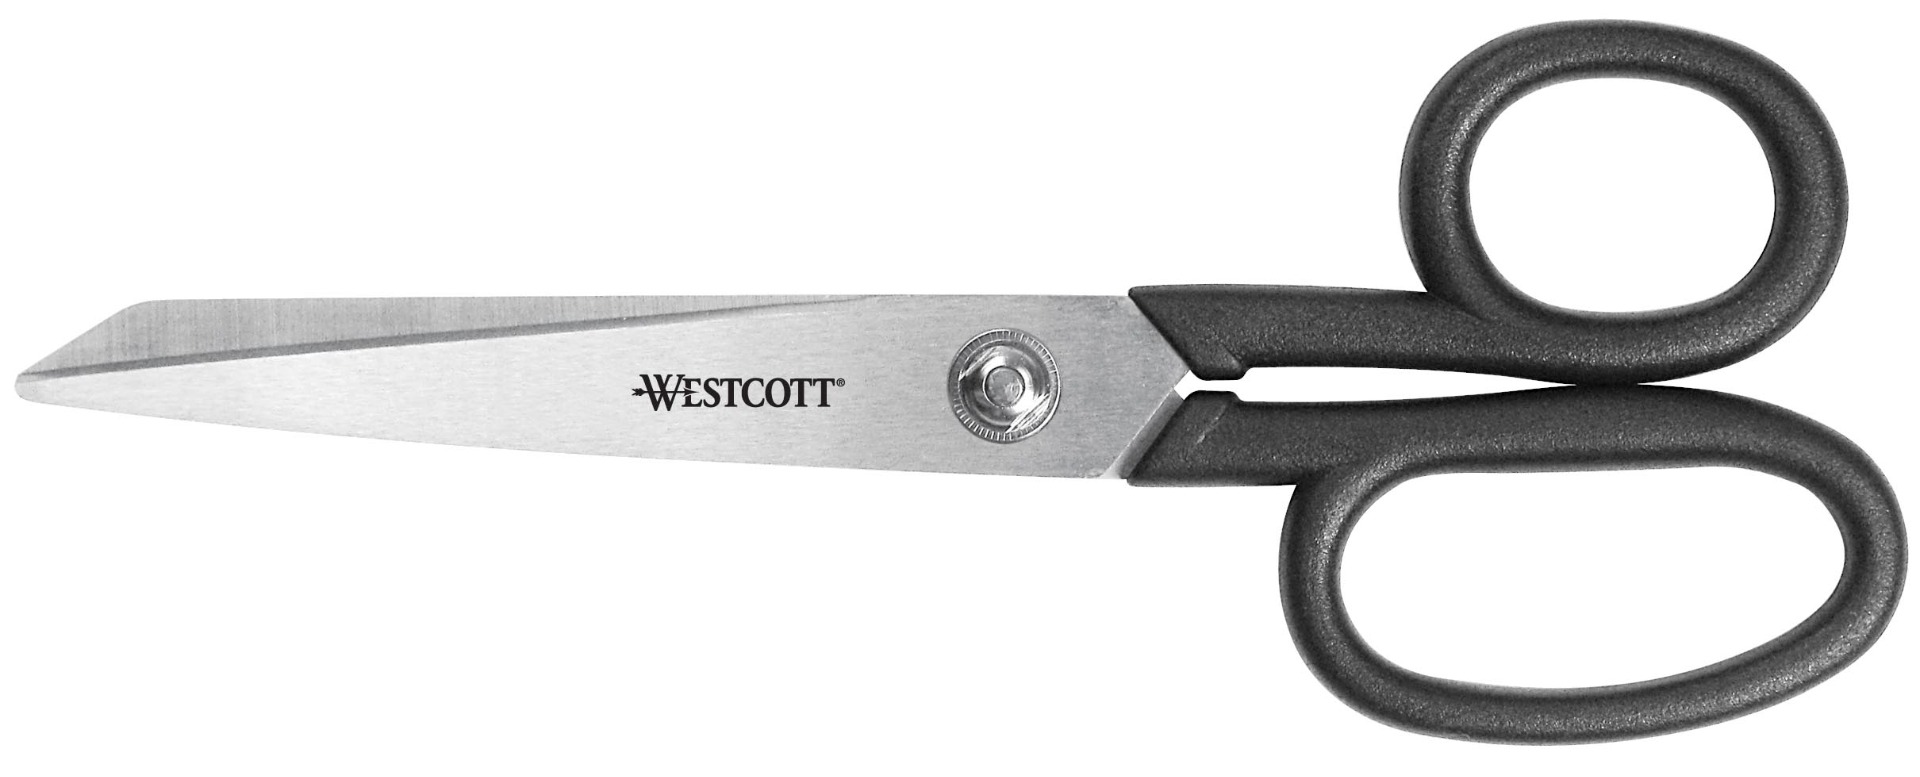 Westcott 7" All Purpose Adjustable Kleencut Shears (11137-PARENT)